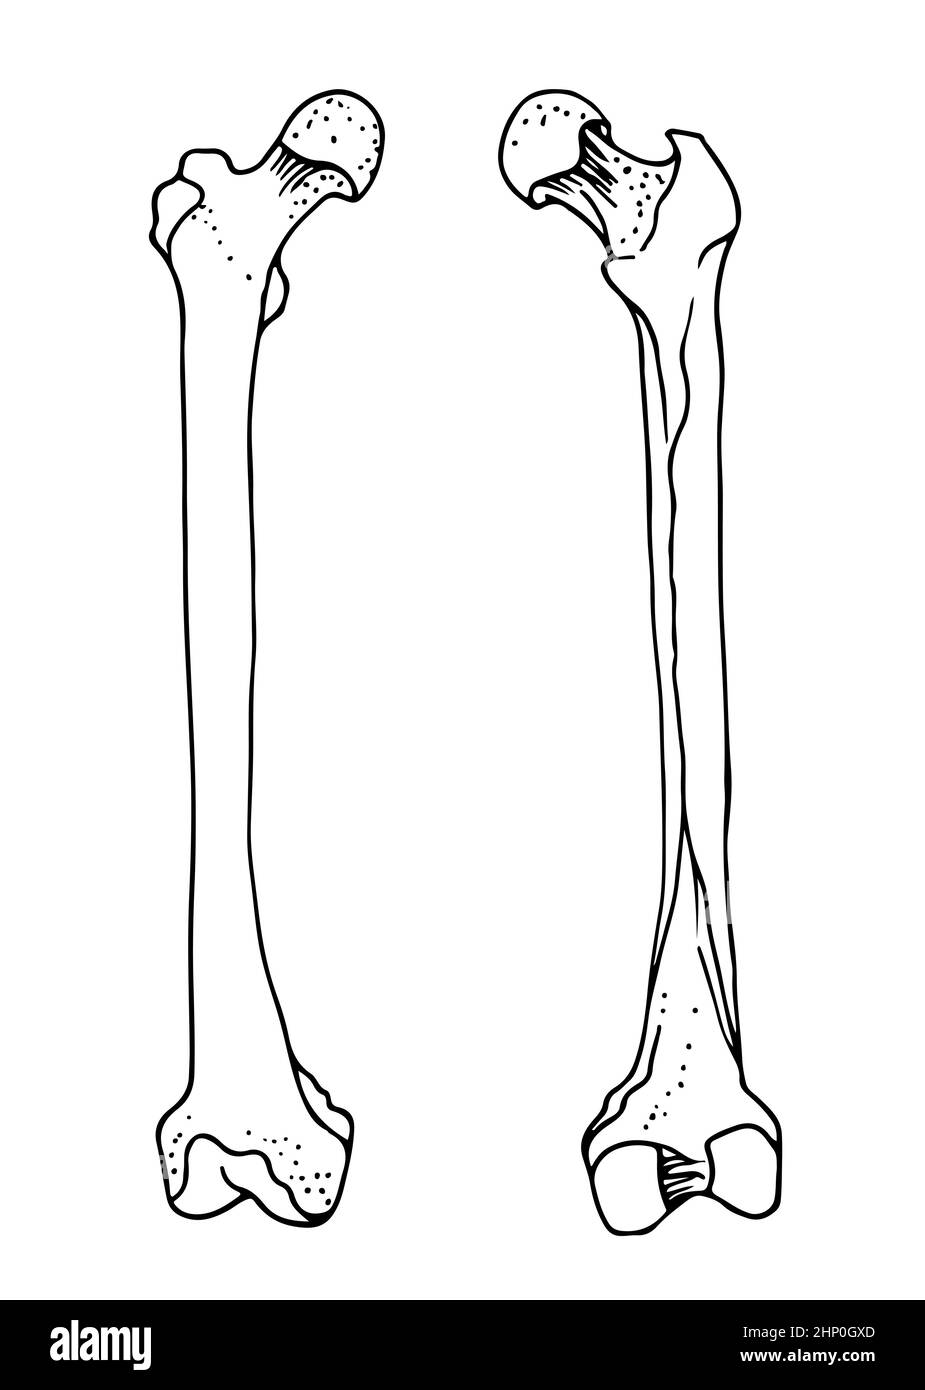 Human femur bones, vector hand drawn illustration isolated on a white background, orthopedics medicine anatomy sketch Stock Vector